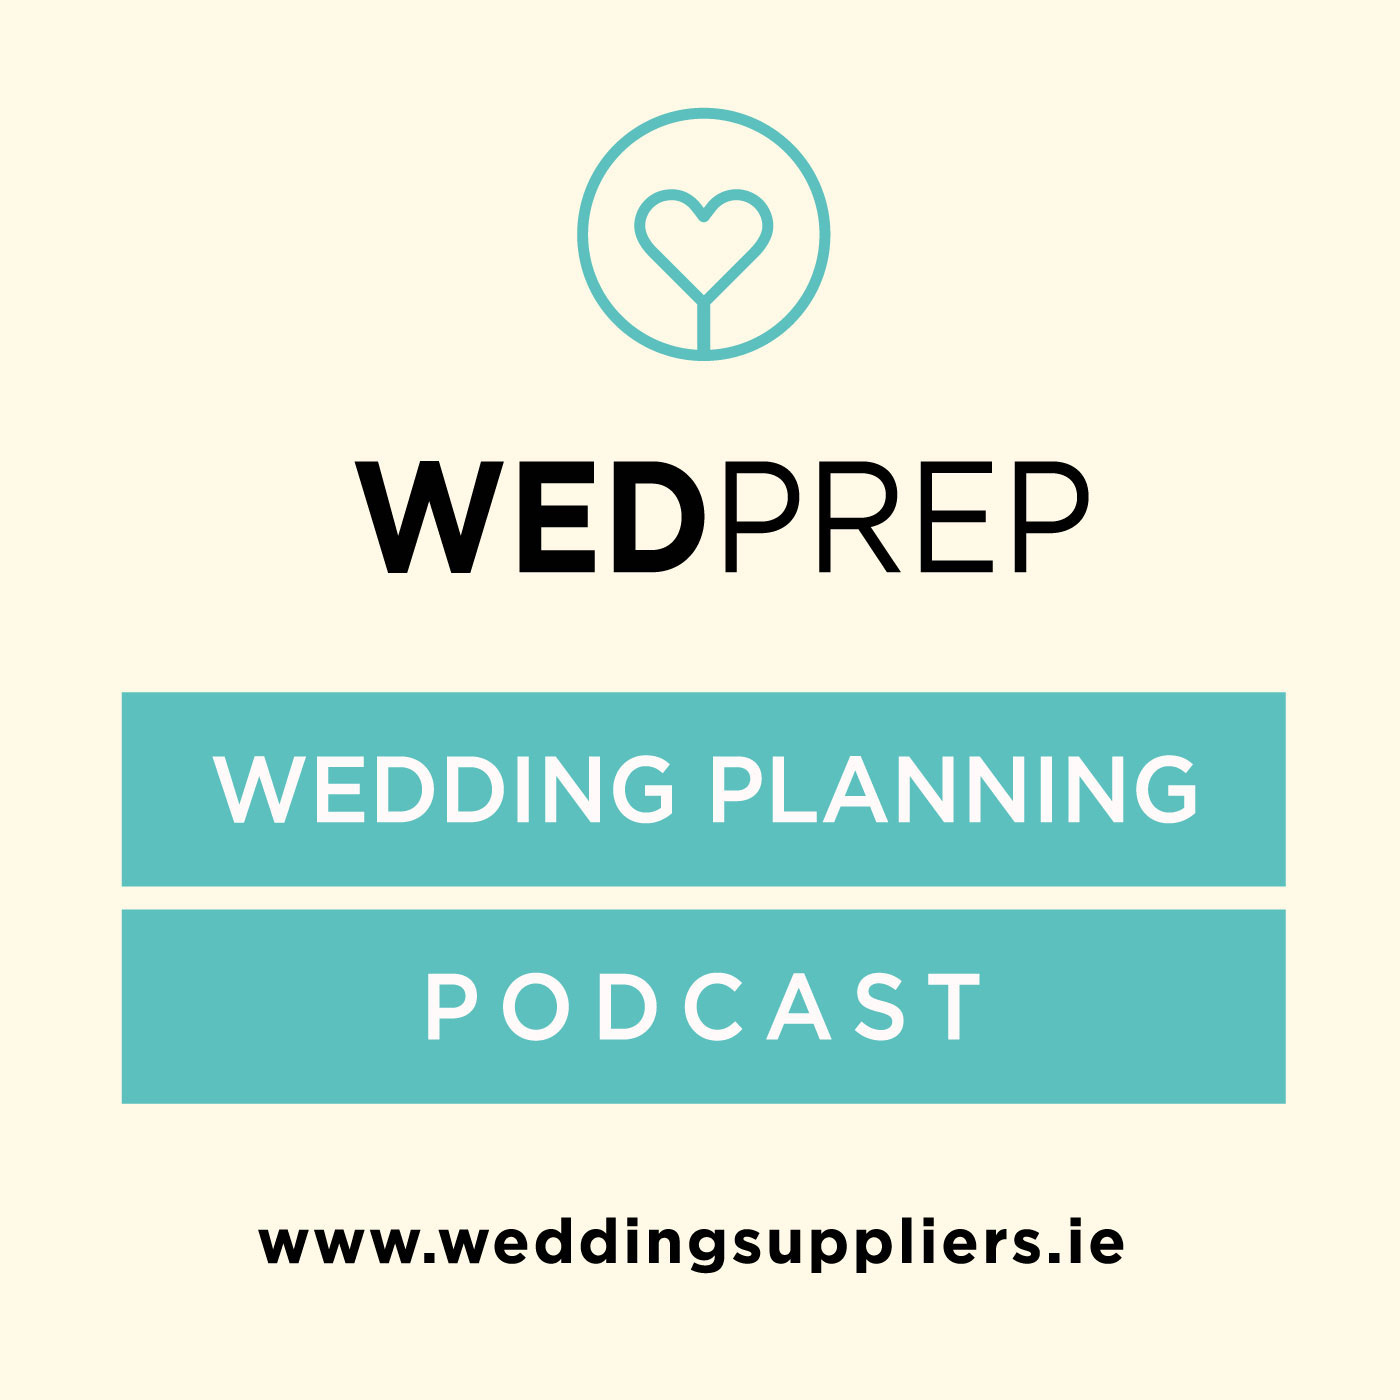 Weddingsuppliers.ie "Lets talk Weddings" Podcast